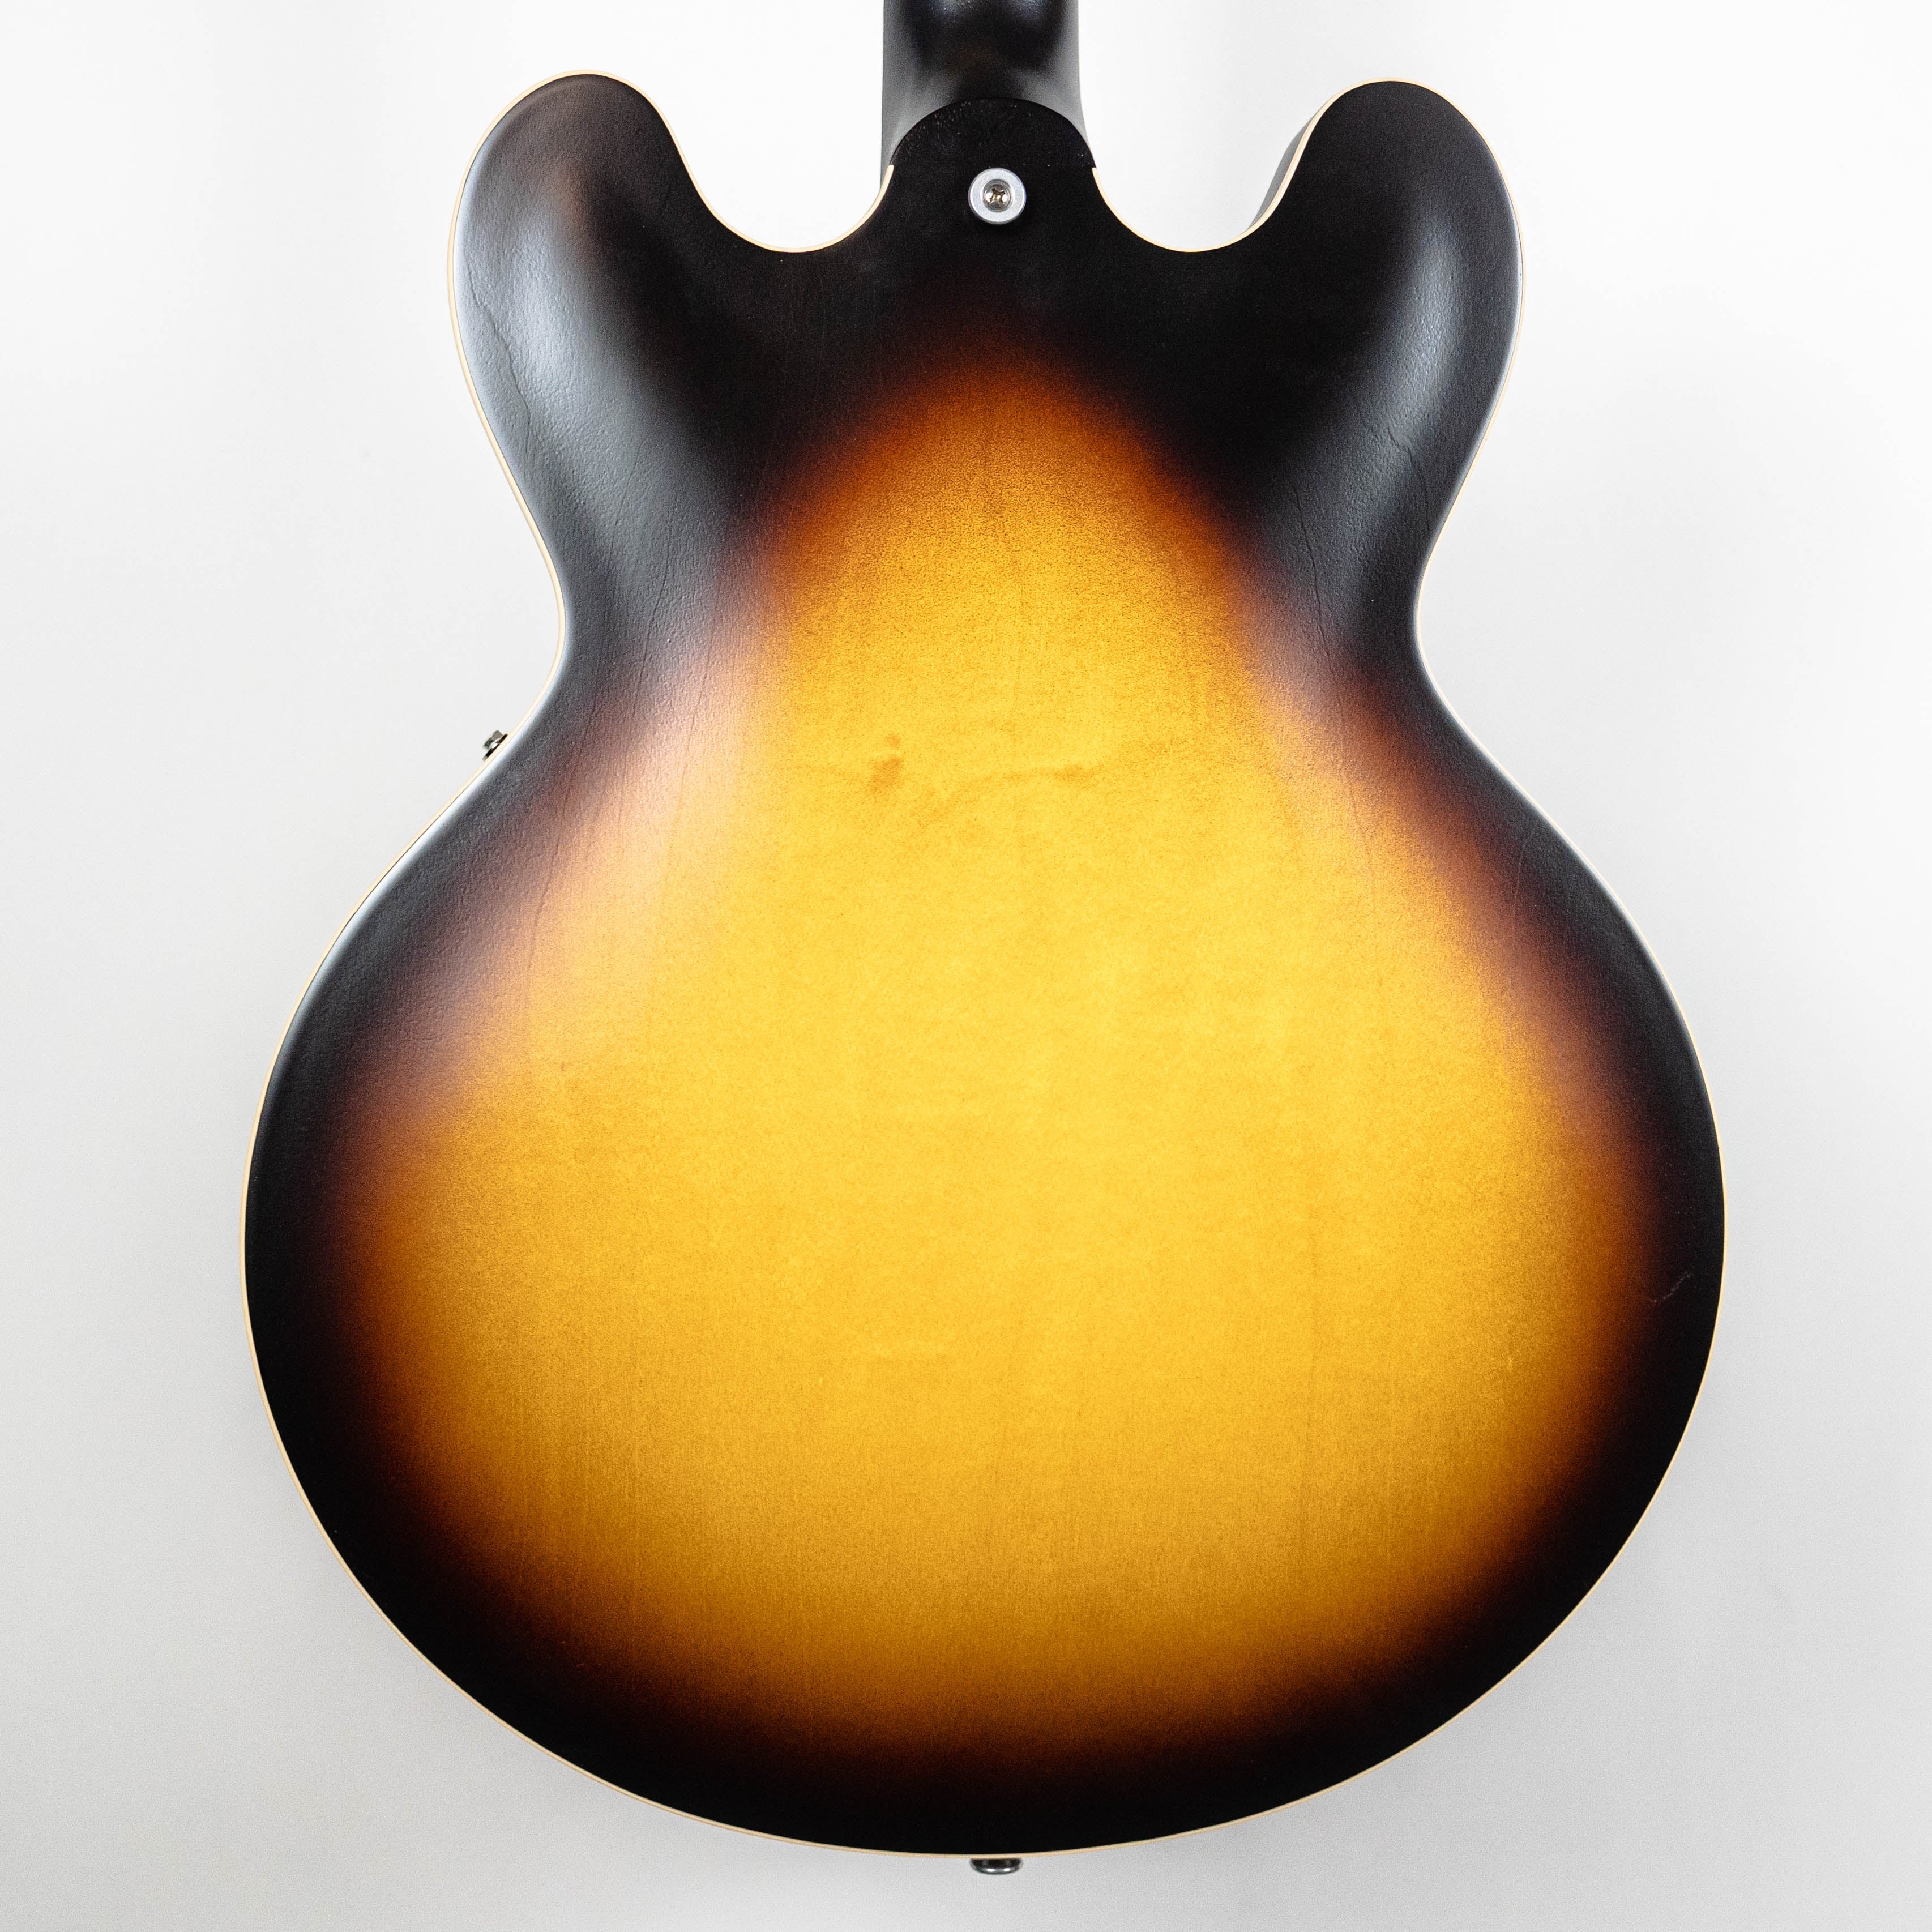 Gibson ES-335 Satin Satin Vintage Burst